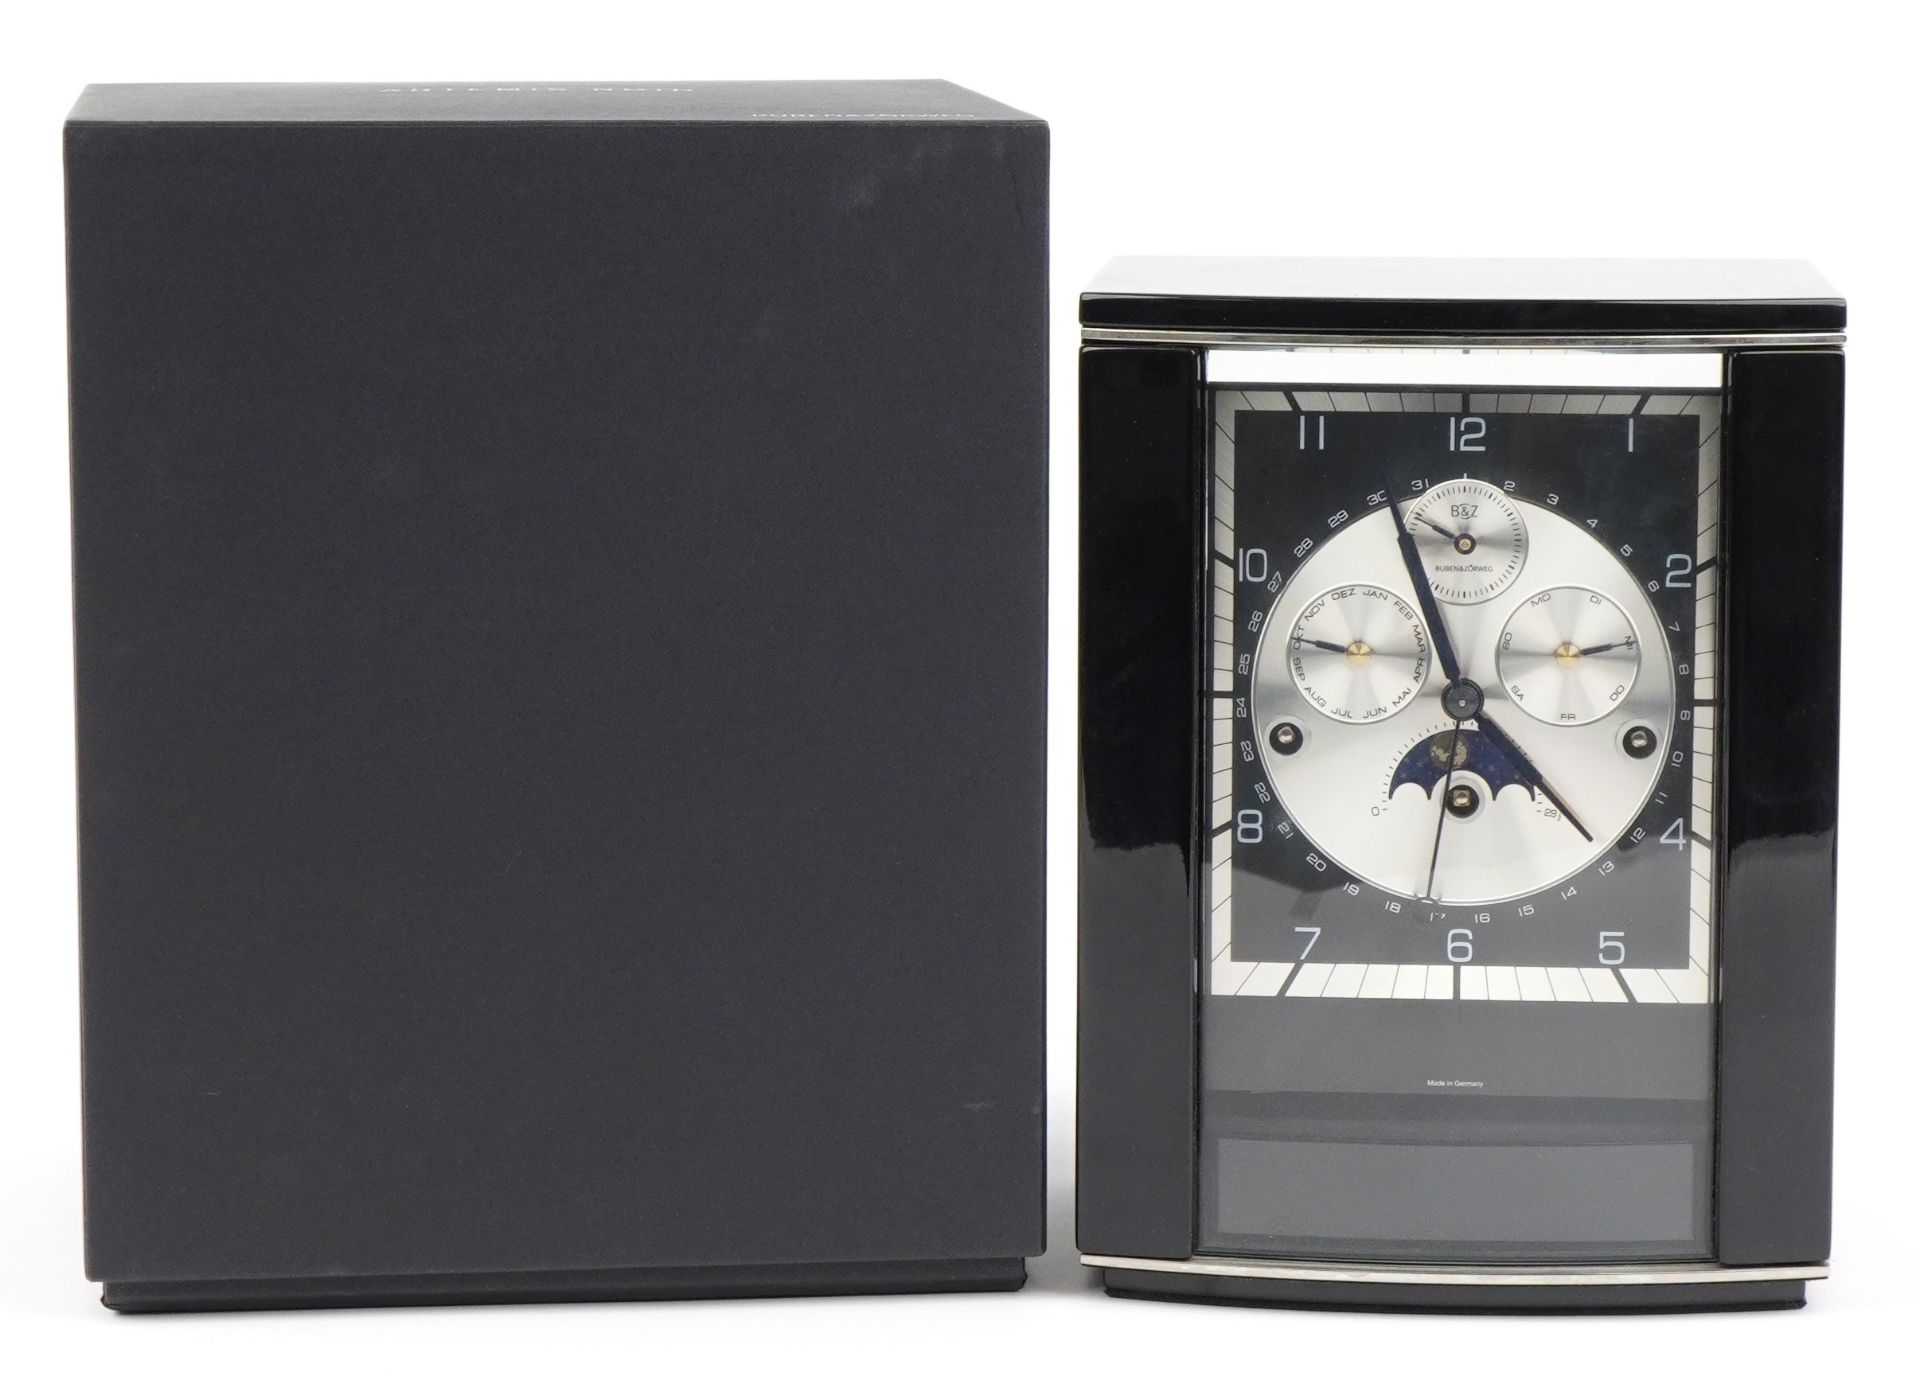 Buben & Zorweg, German Artemis Noir mantle clock with moon phase dial having Arabic numerals, with